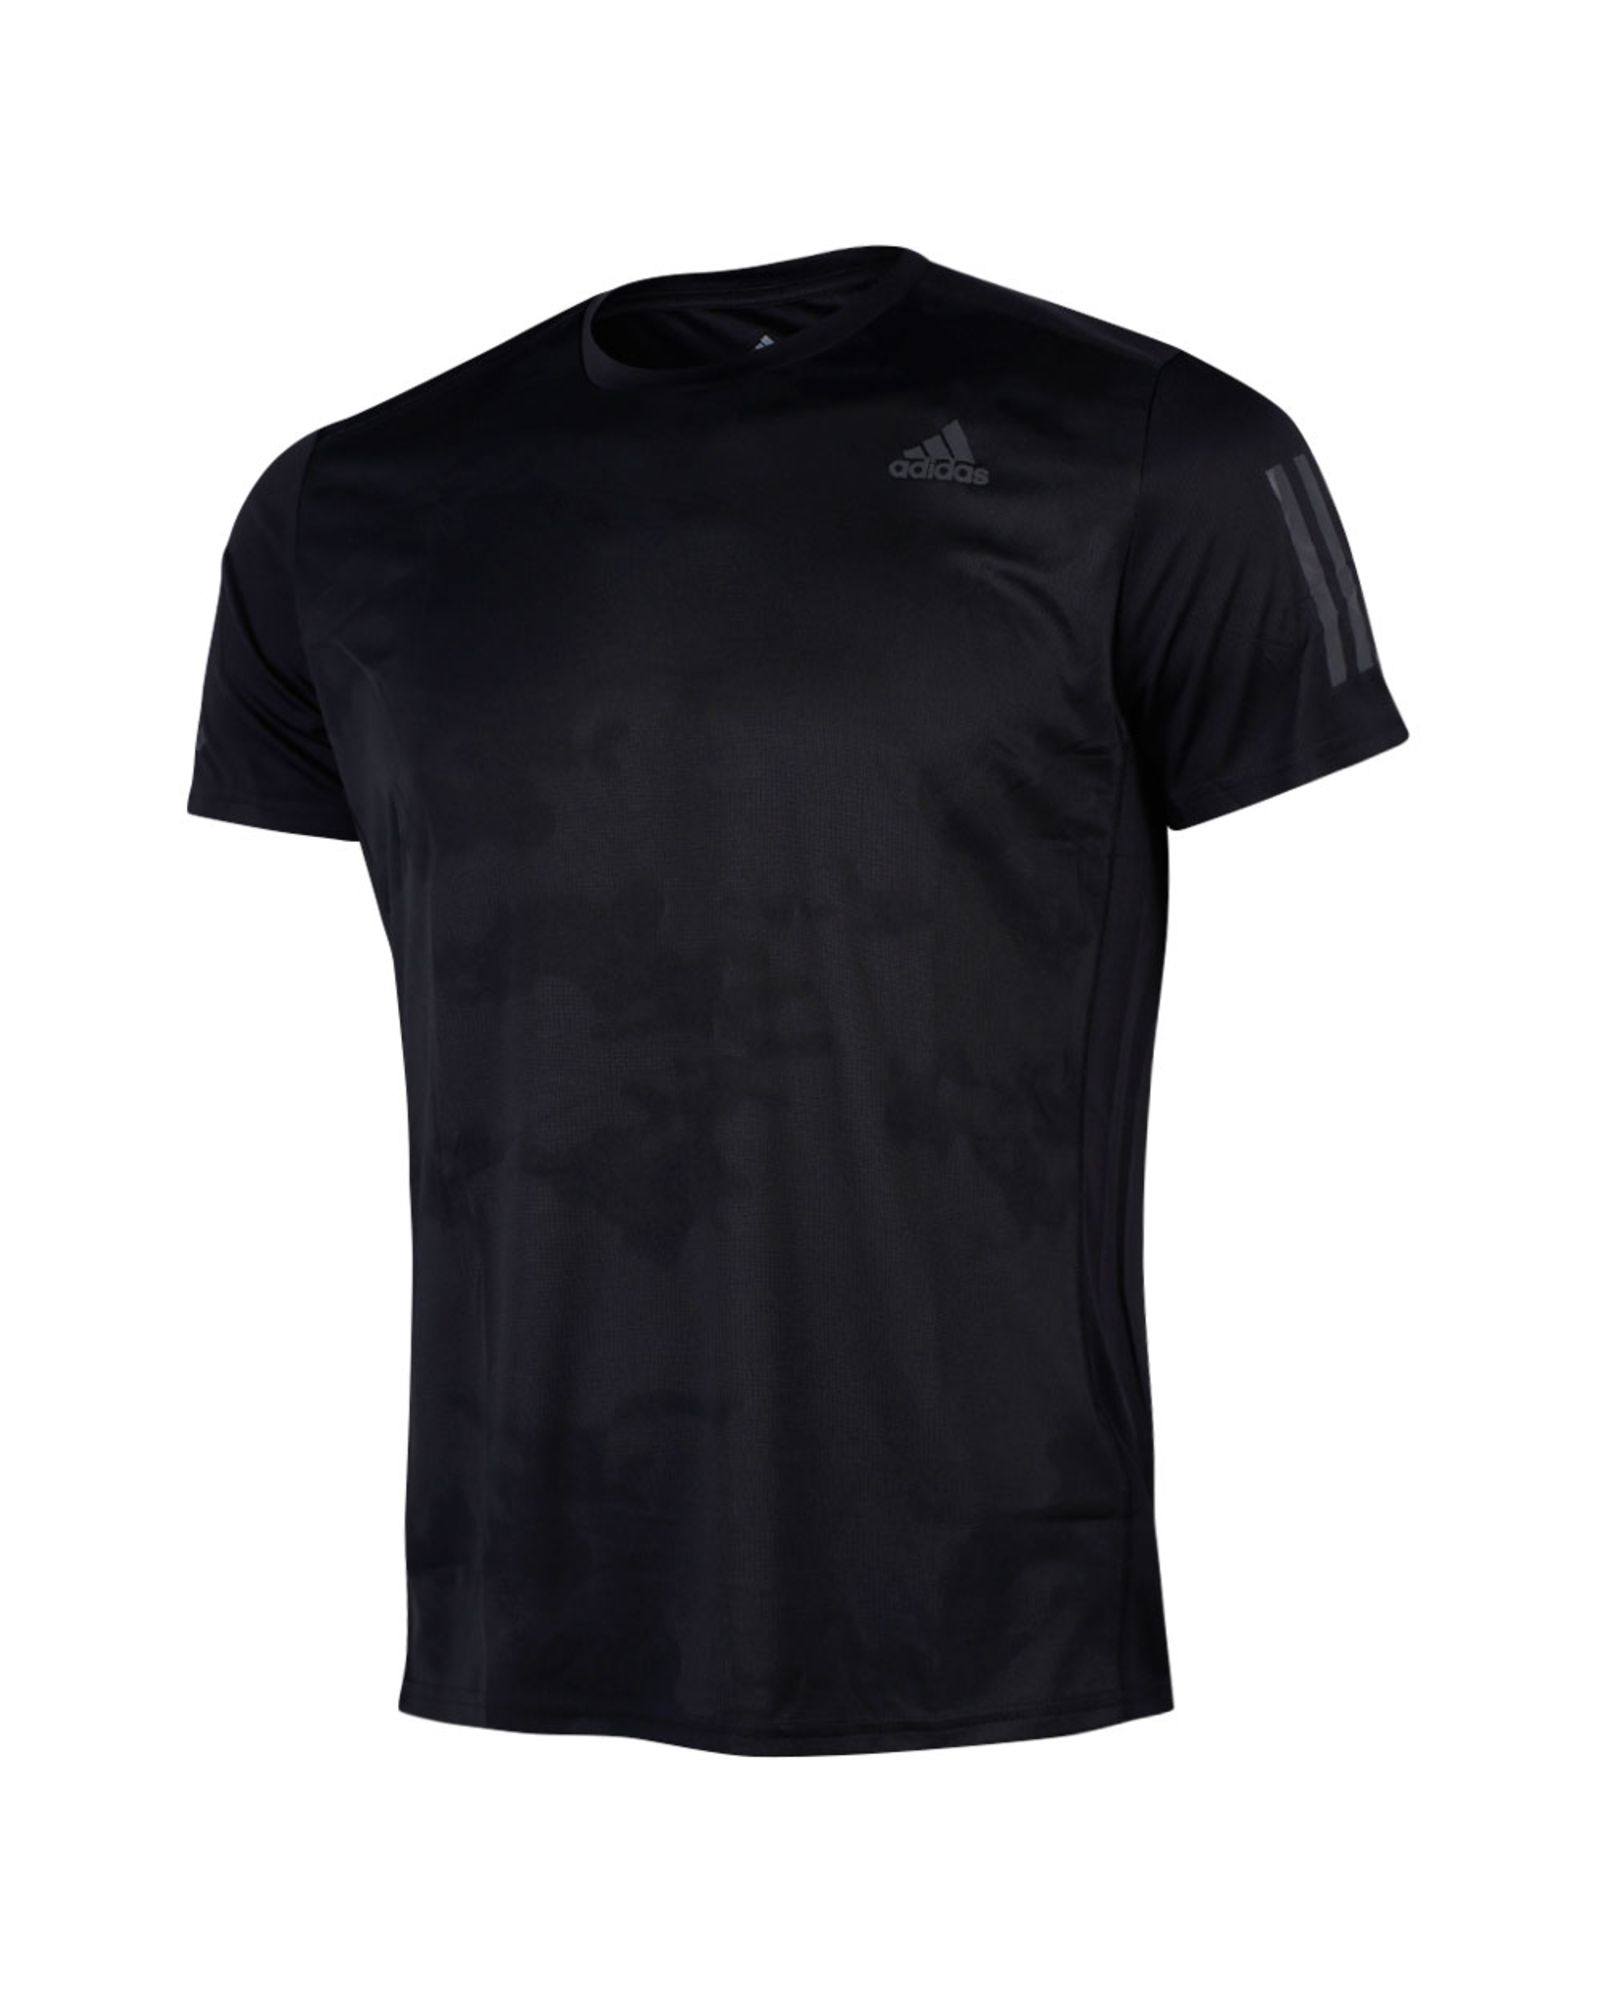 Camiseta de Running Response Negro - Fútbol Factory